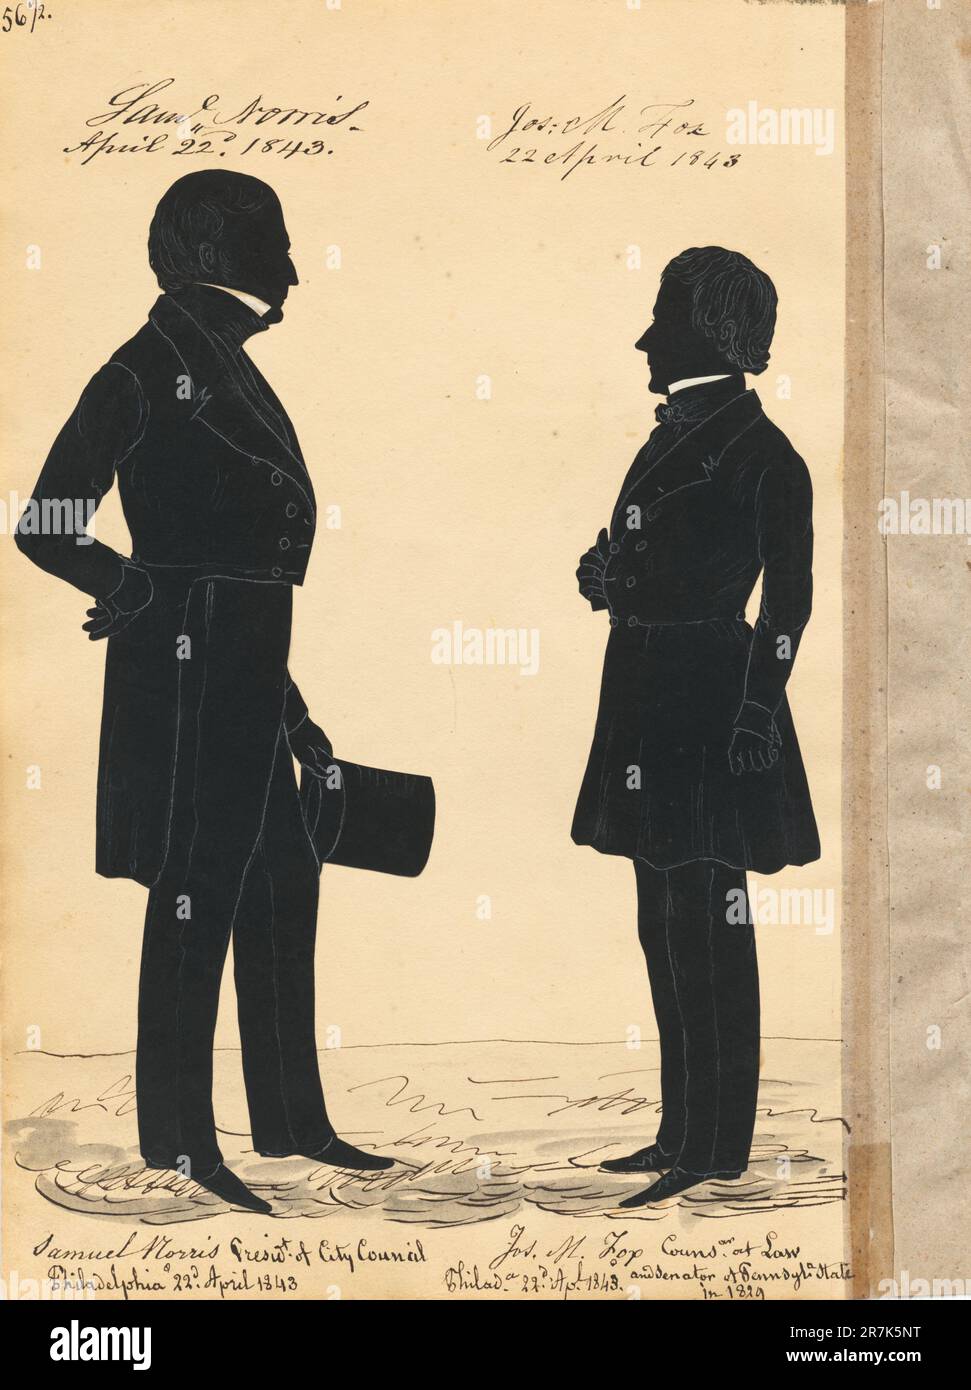 Samuel Norris and Joseph Mickle Fox 1843 Stock Photo